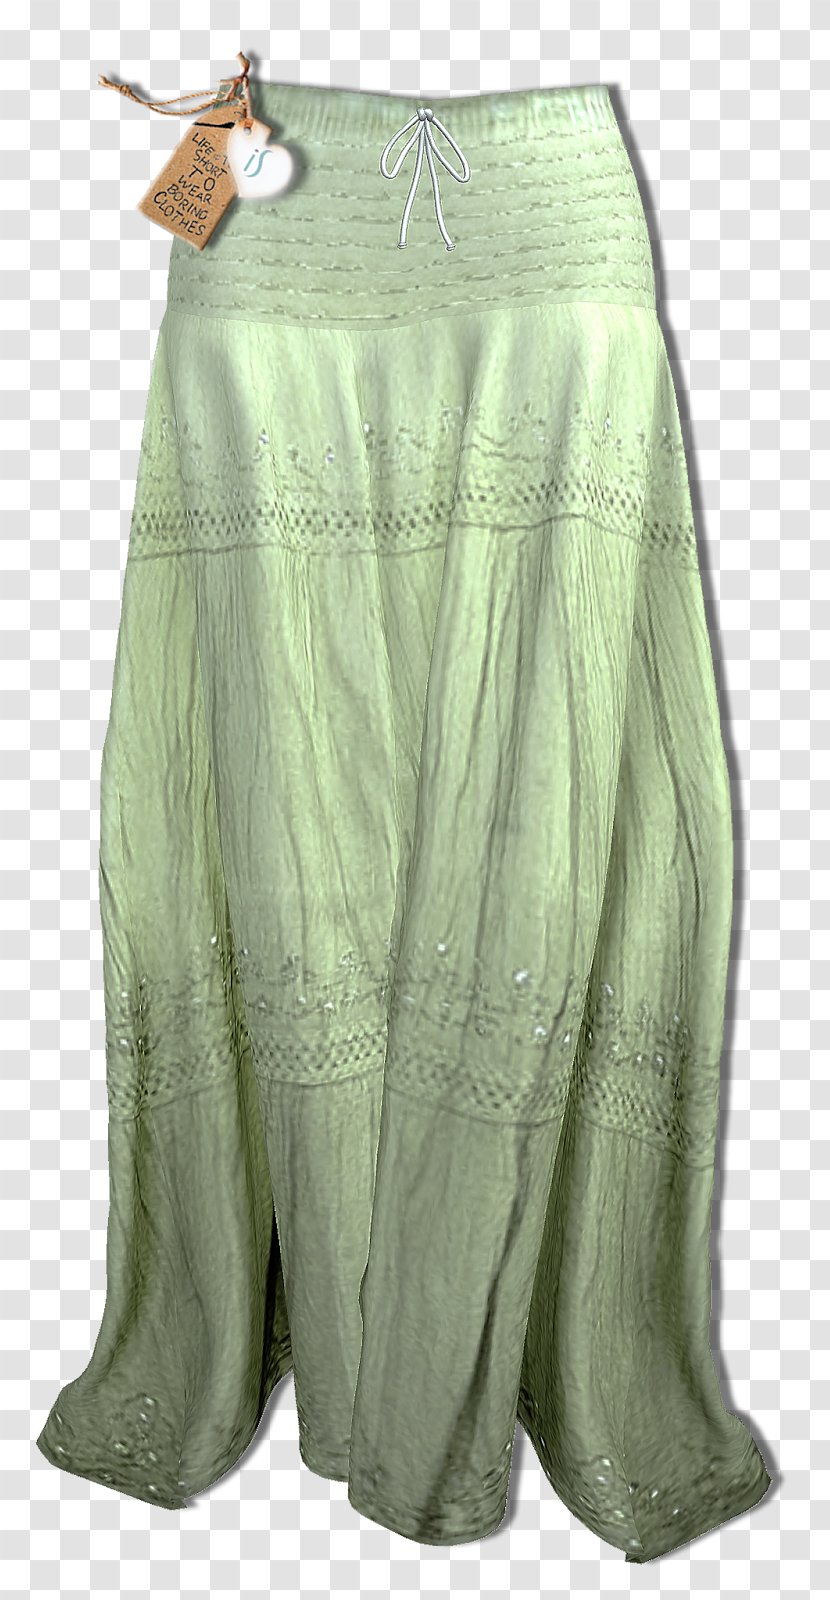 Skirt Clothing Boho-chic Fashion Second Life - Blog - Boho Style Transparent PNG